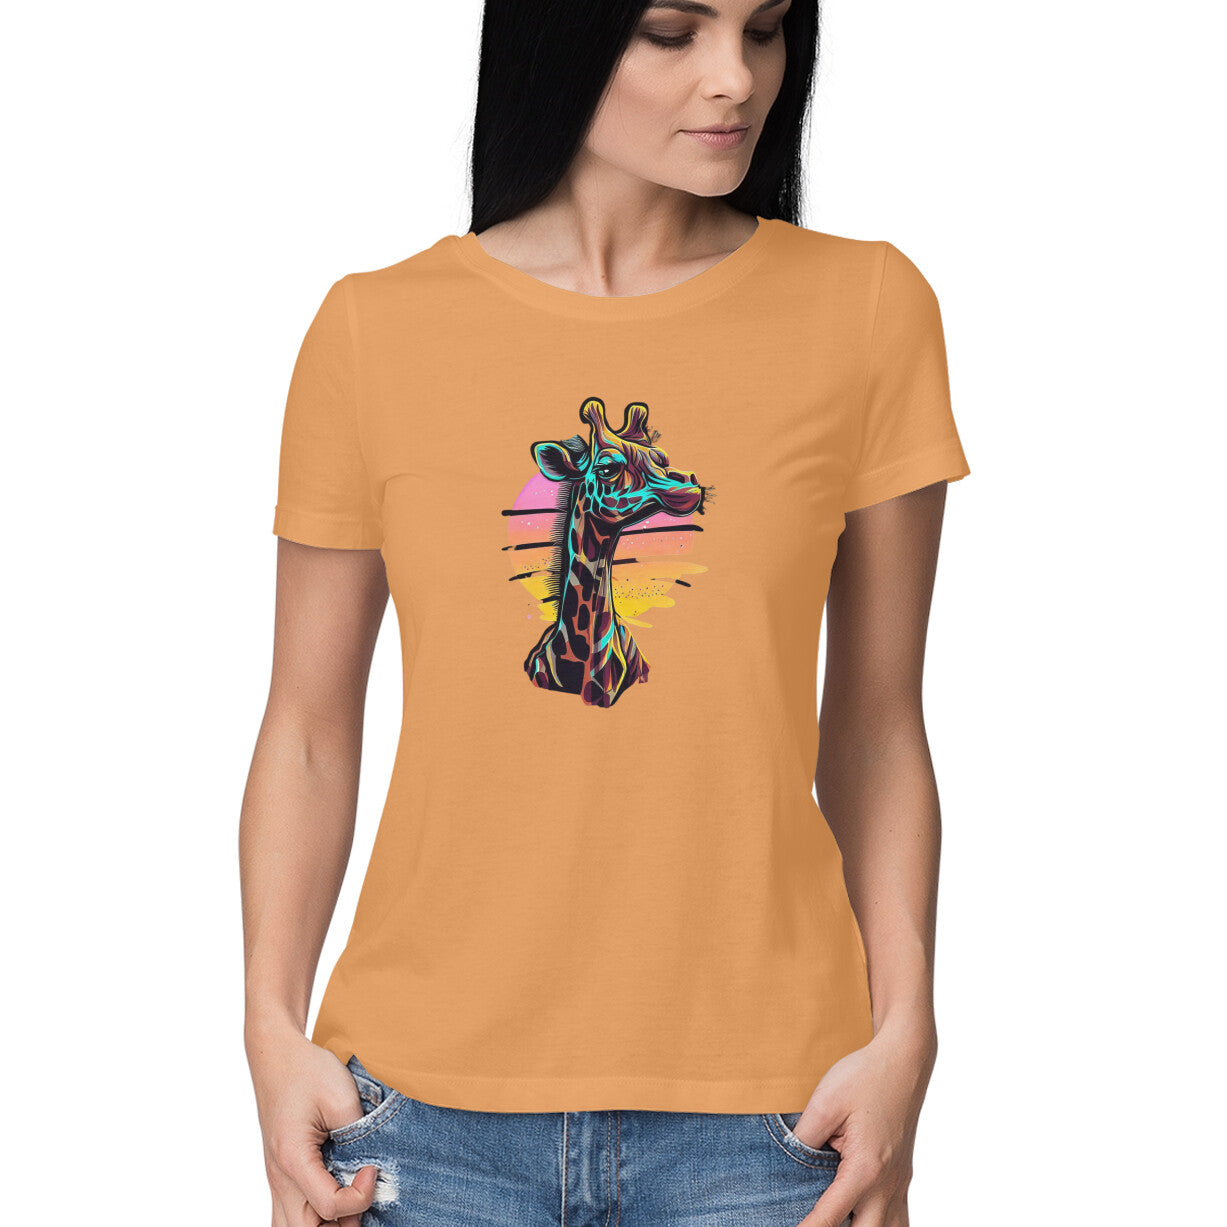 Giraffe Design Women's Round Neck T-Shirt: Nature-Inspired Fashion Charm